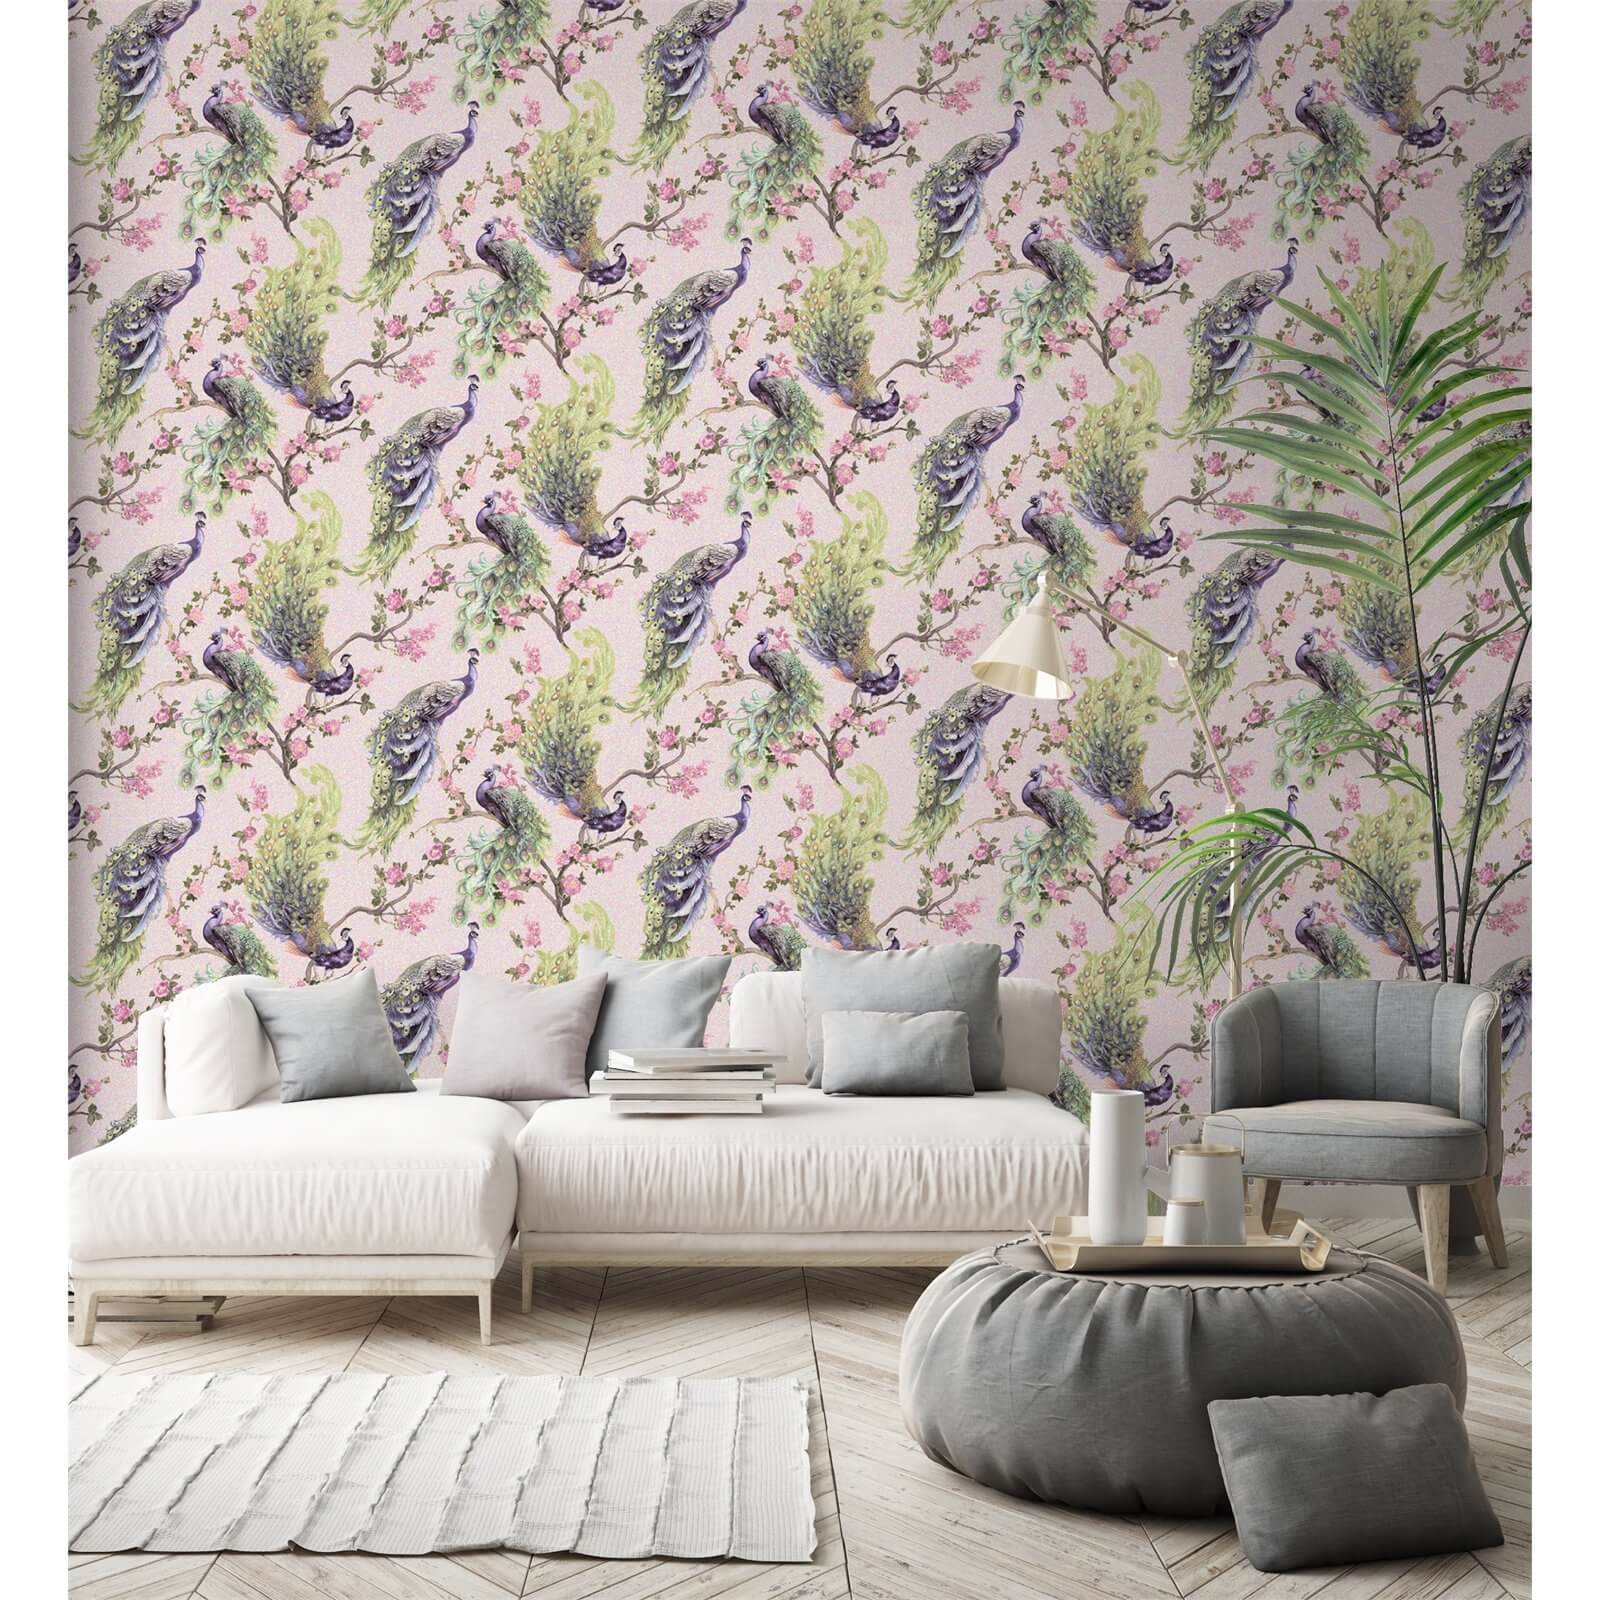 Holden Decor Menali Peacock Floral Textured Glitter Pink Wallpaper